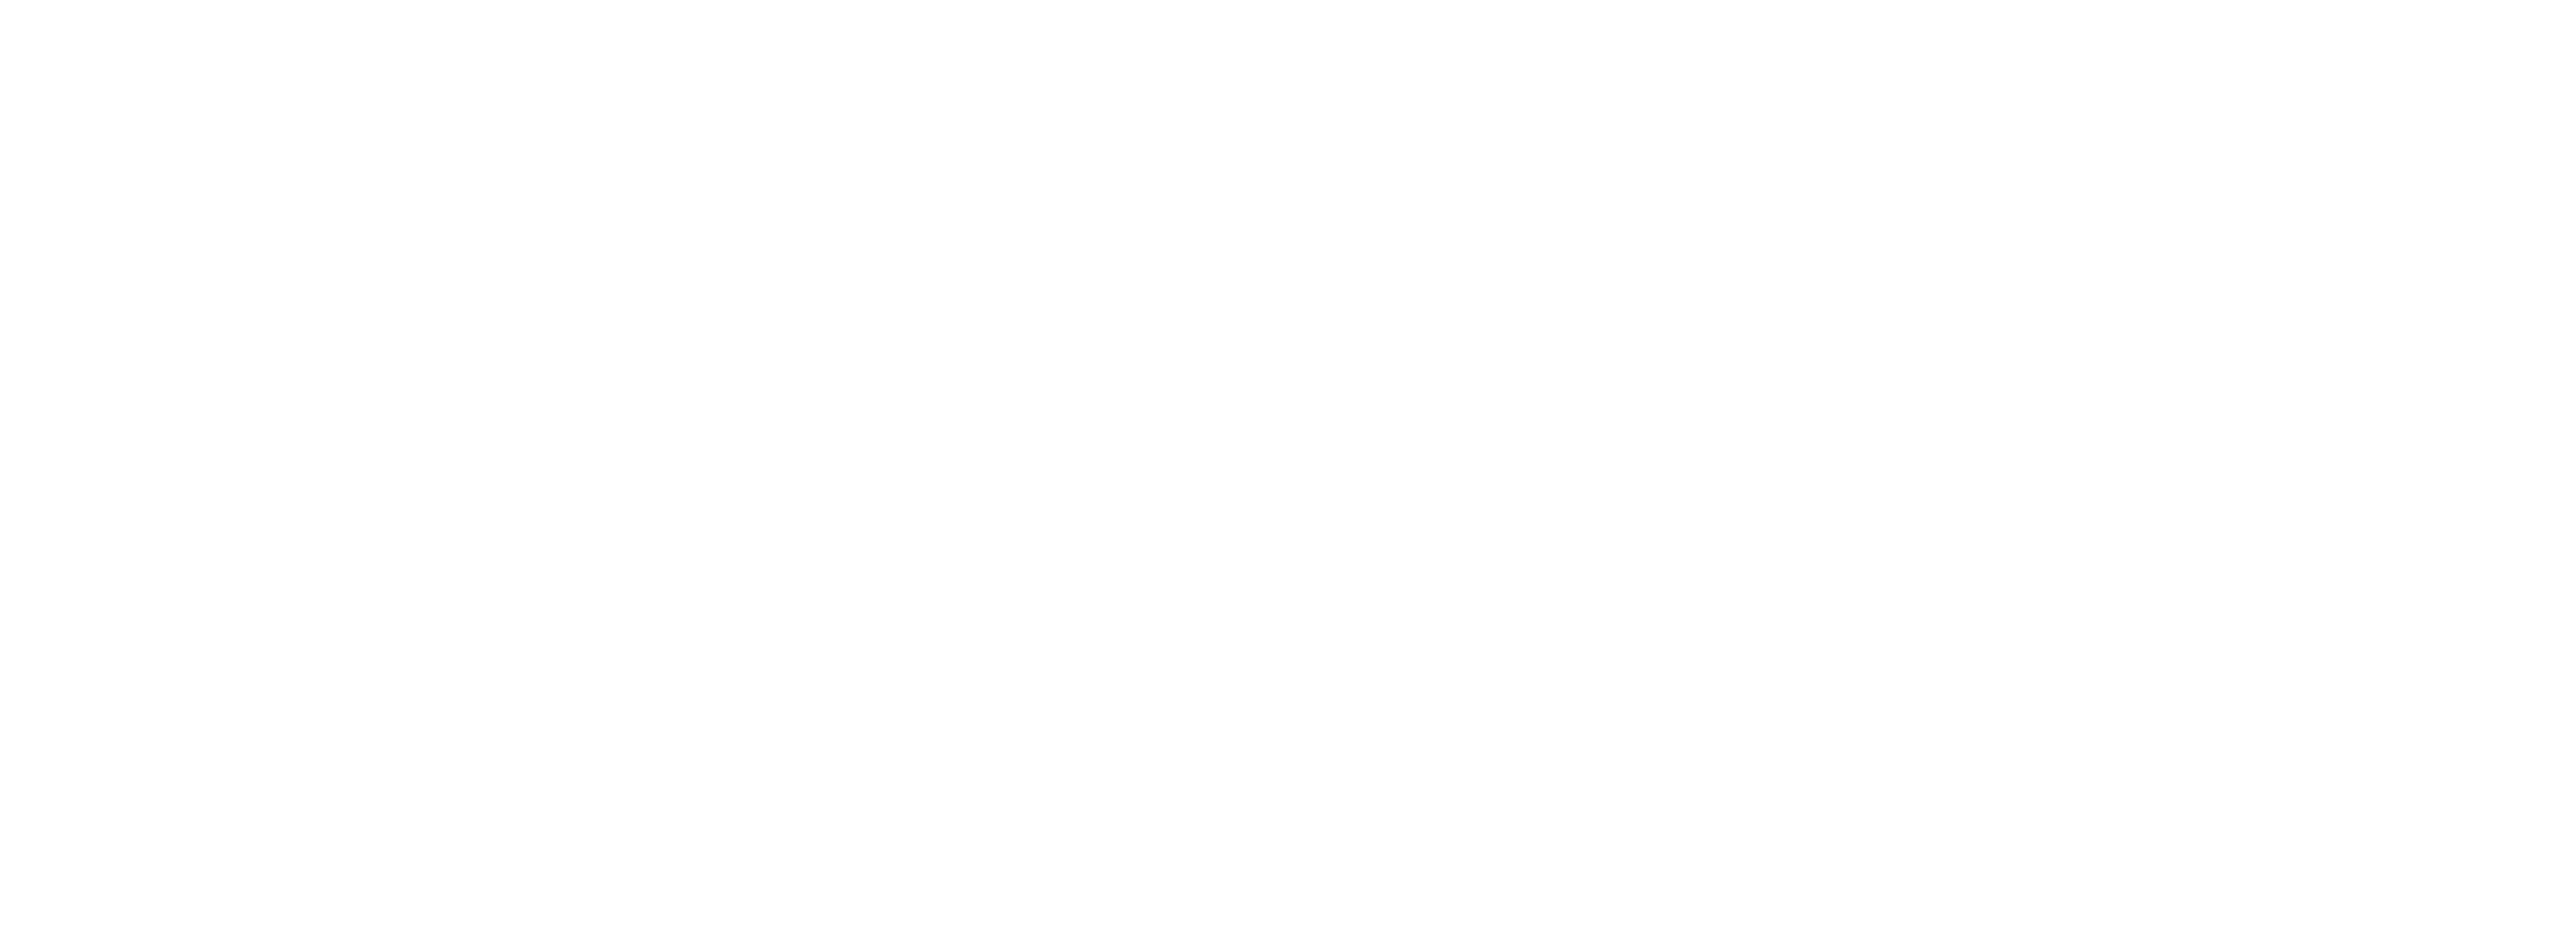 Elegant white script typography stating "cheryl hudson" on a dark green background. OCIDM,io Branding and Digital marketing Hamilton, Toronto, Oakville, Mississauga